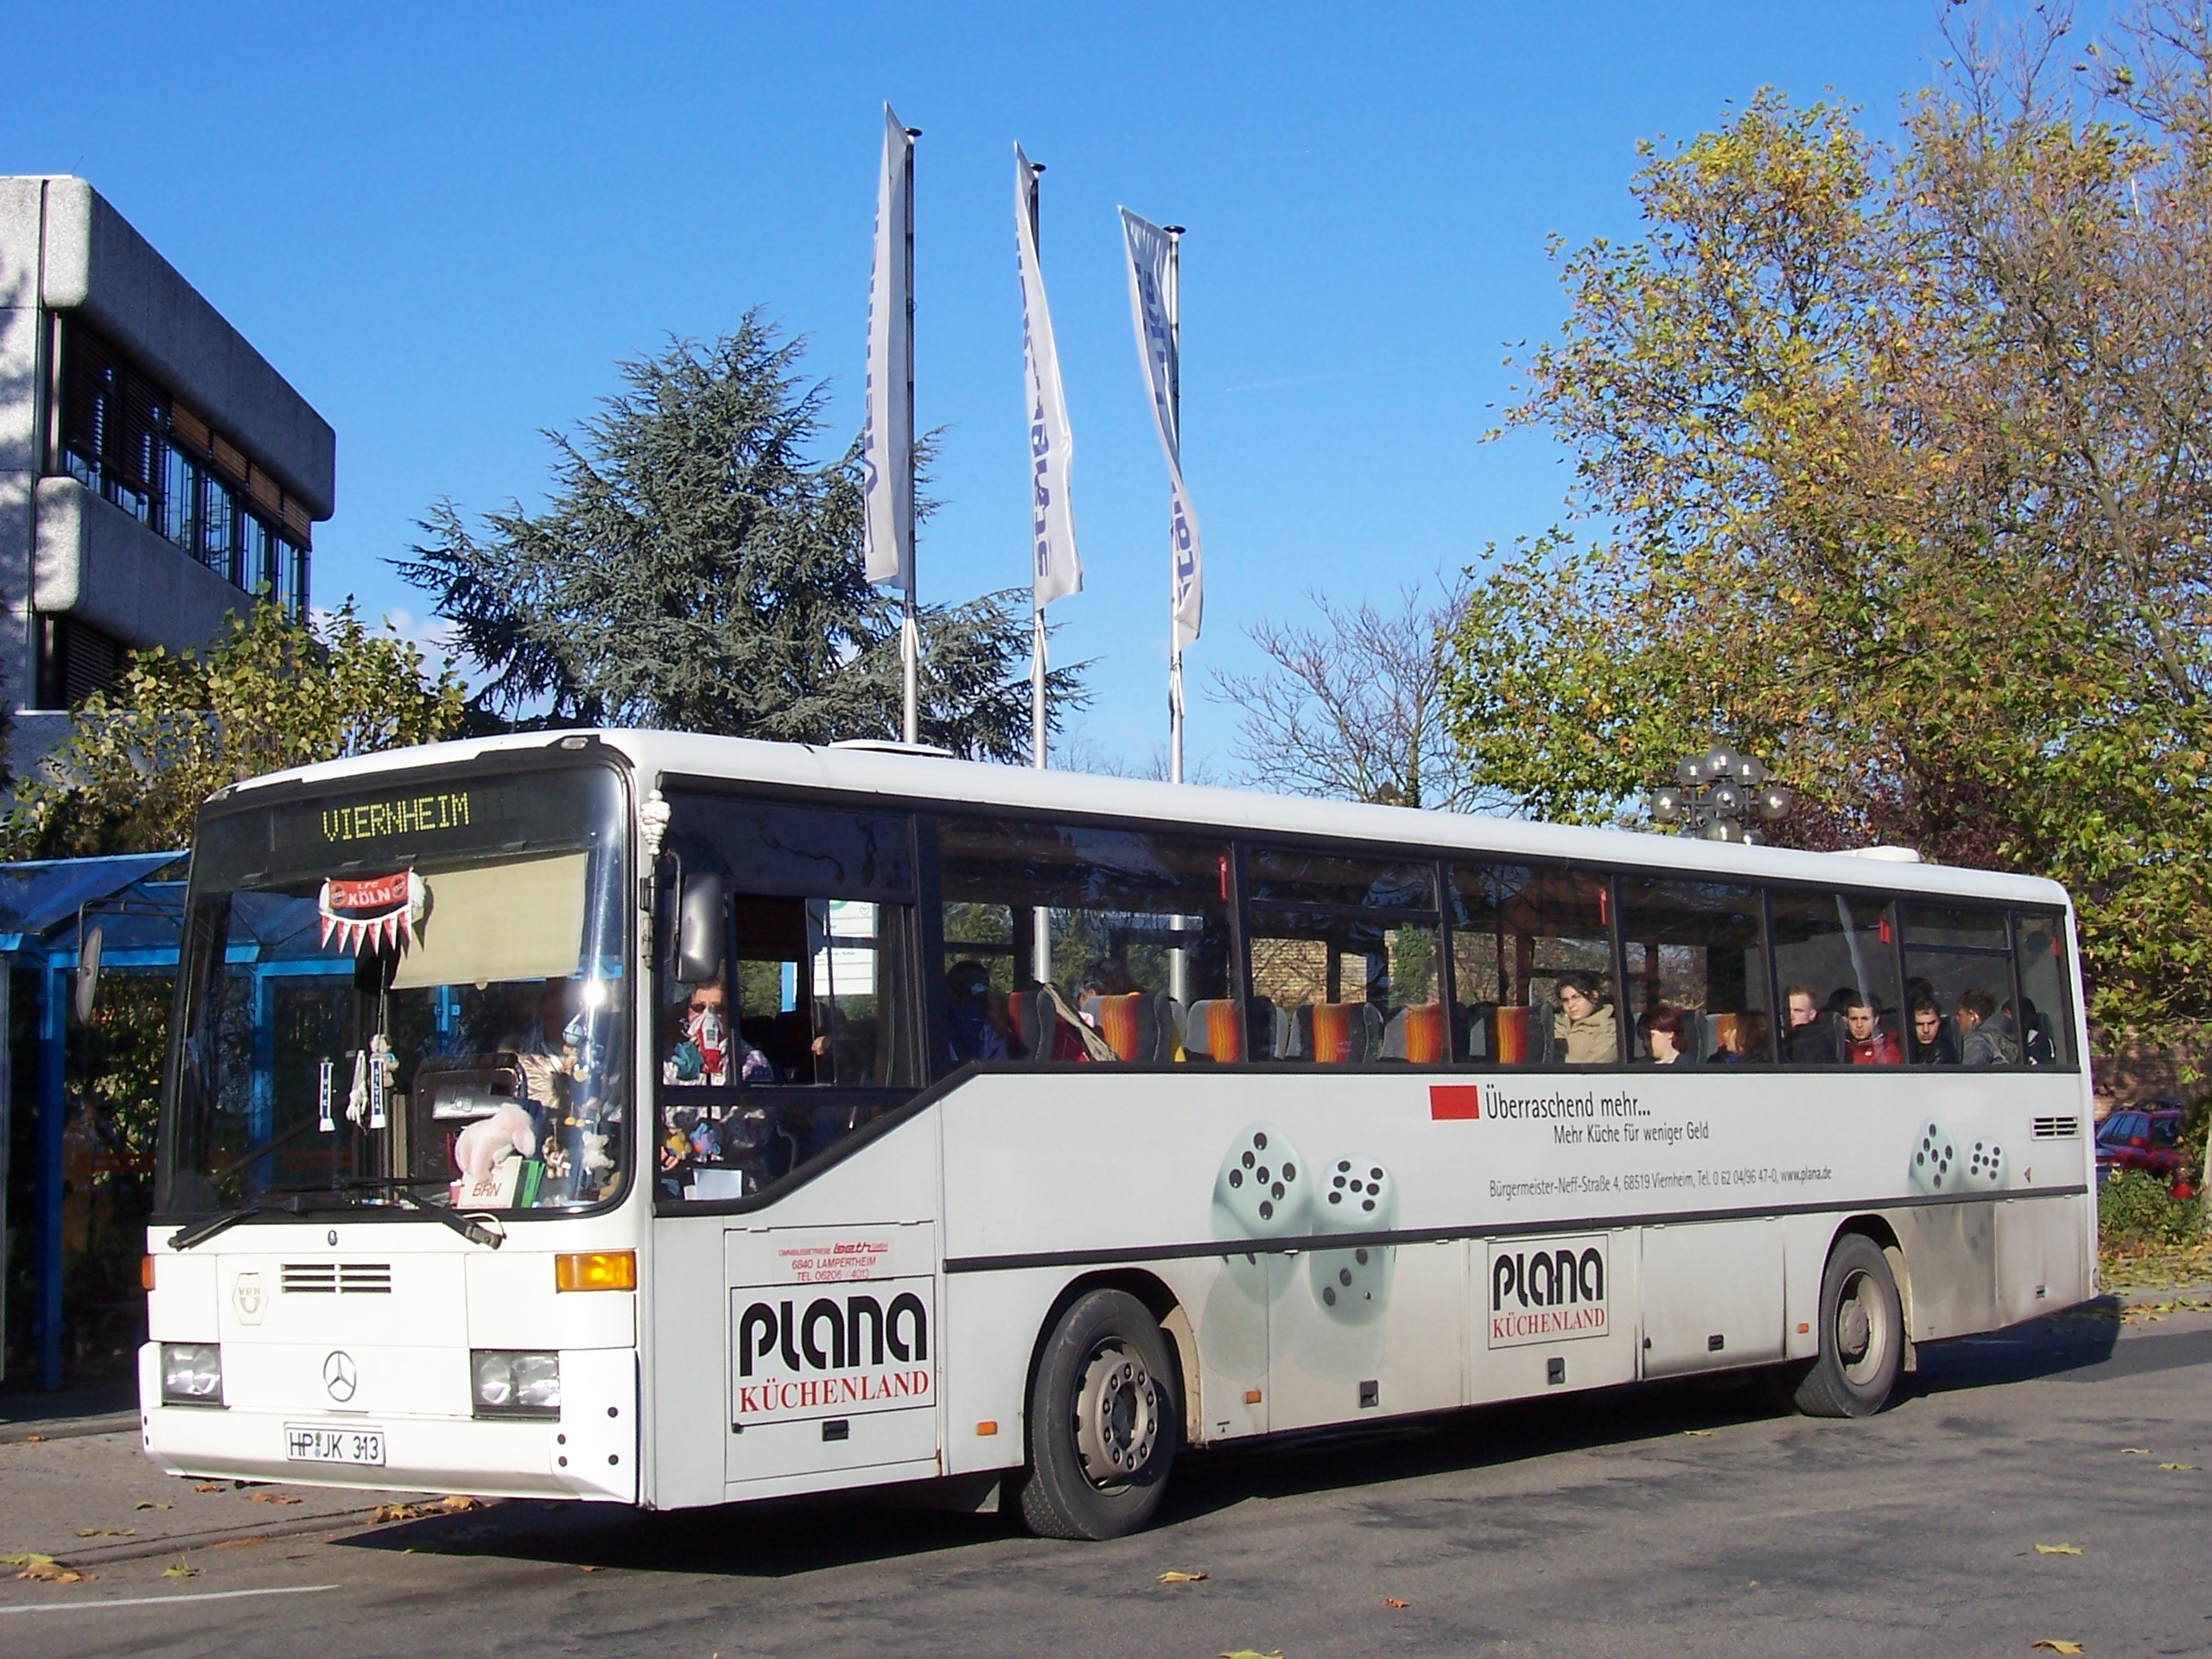 Mercedes-Benz Bus